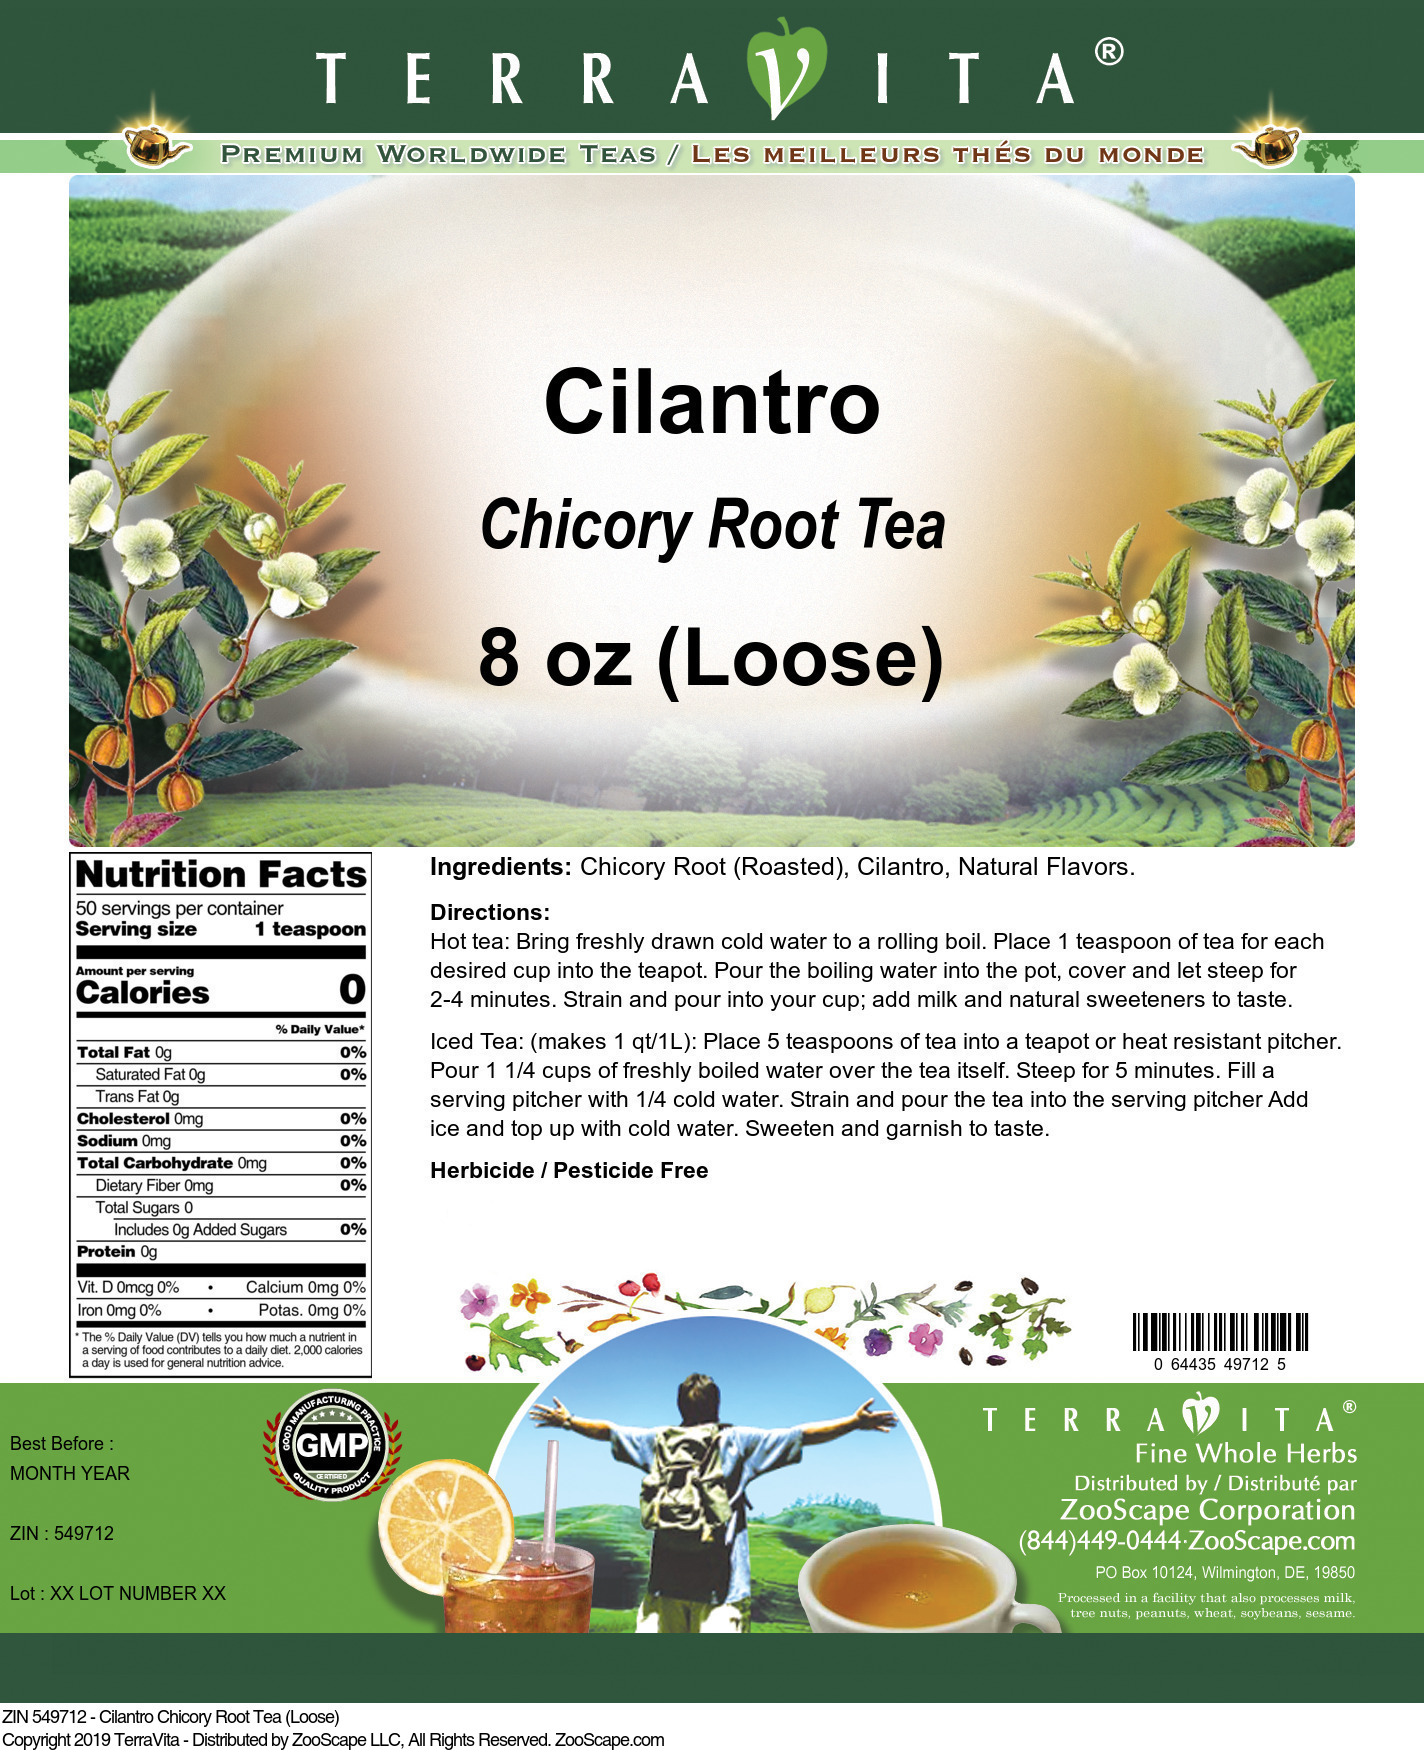 Cilantro Chicory Root Tea (Loose) - Label